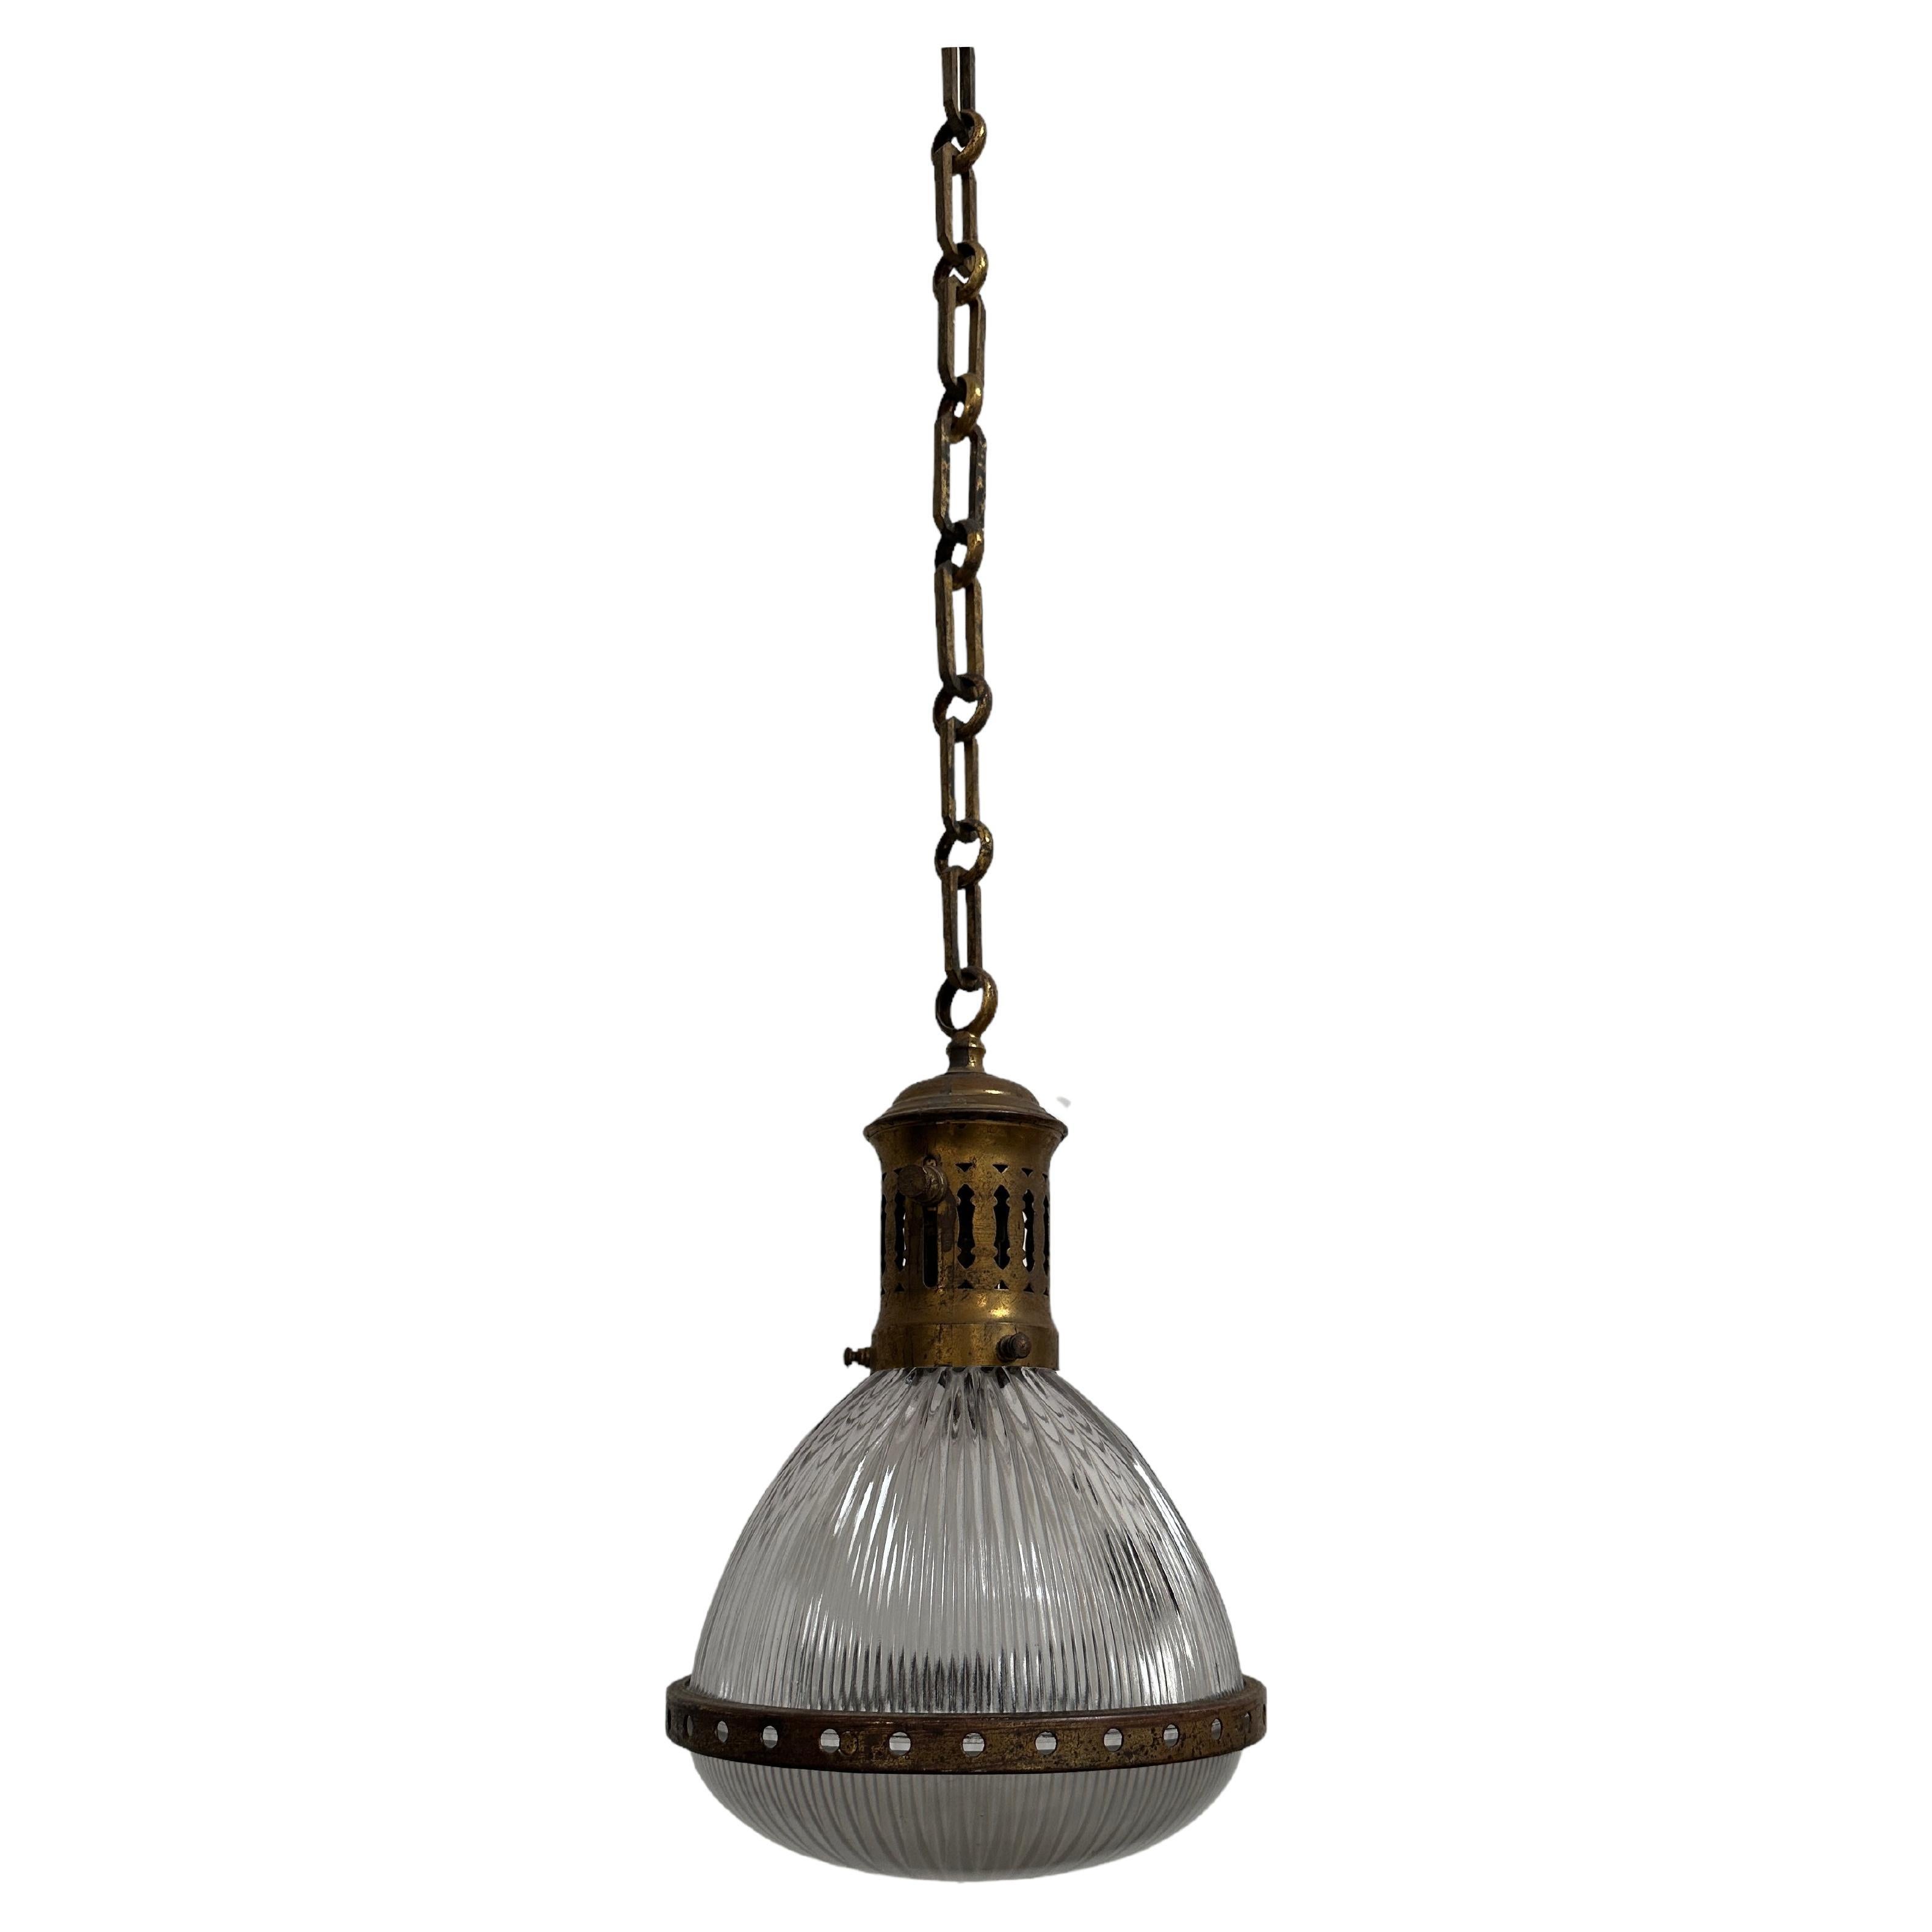 Antique Vintage French Caged Teardrop Holophane Glass Ceiling Pendant Light Lamp For Sale